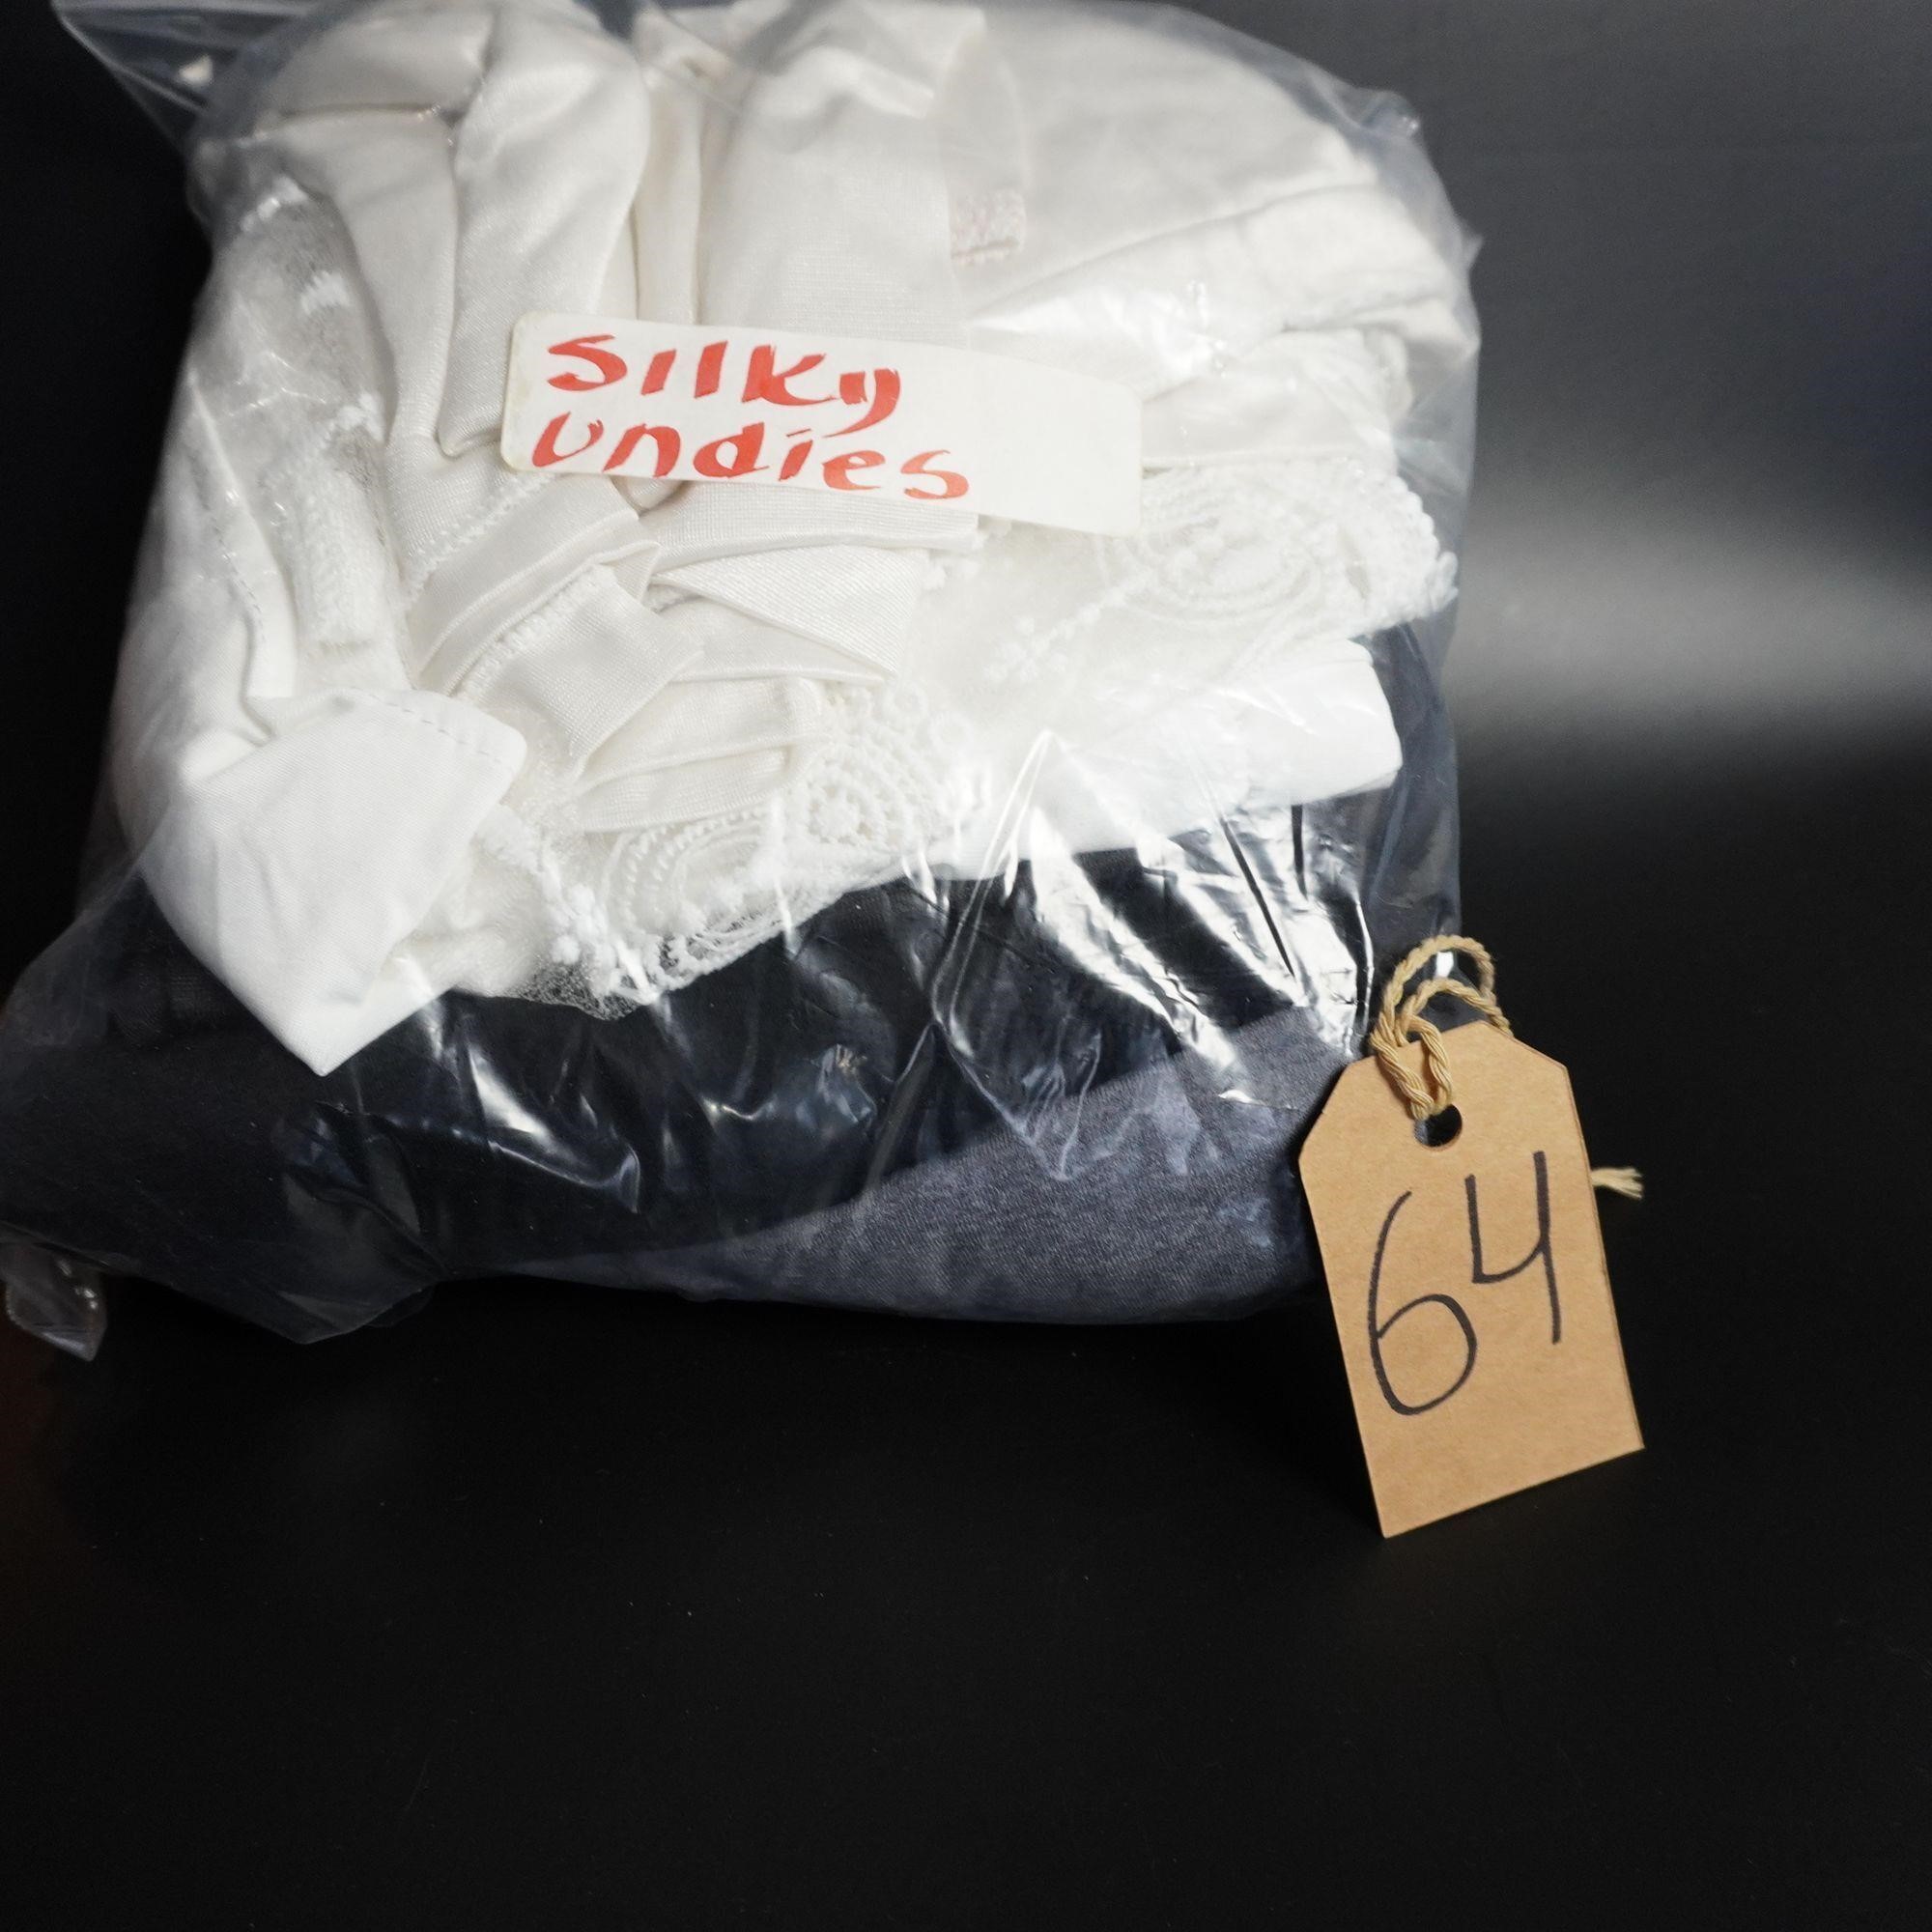 Assorted Silky Undies (6pcs)